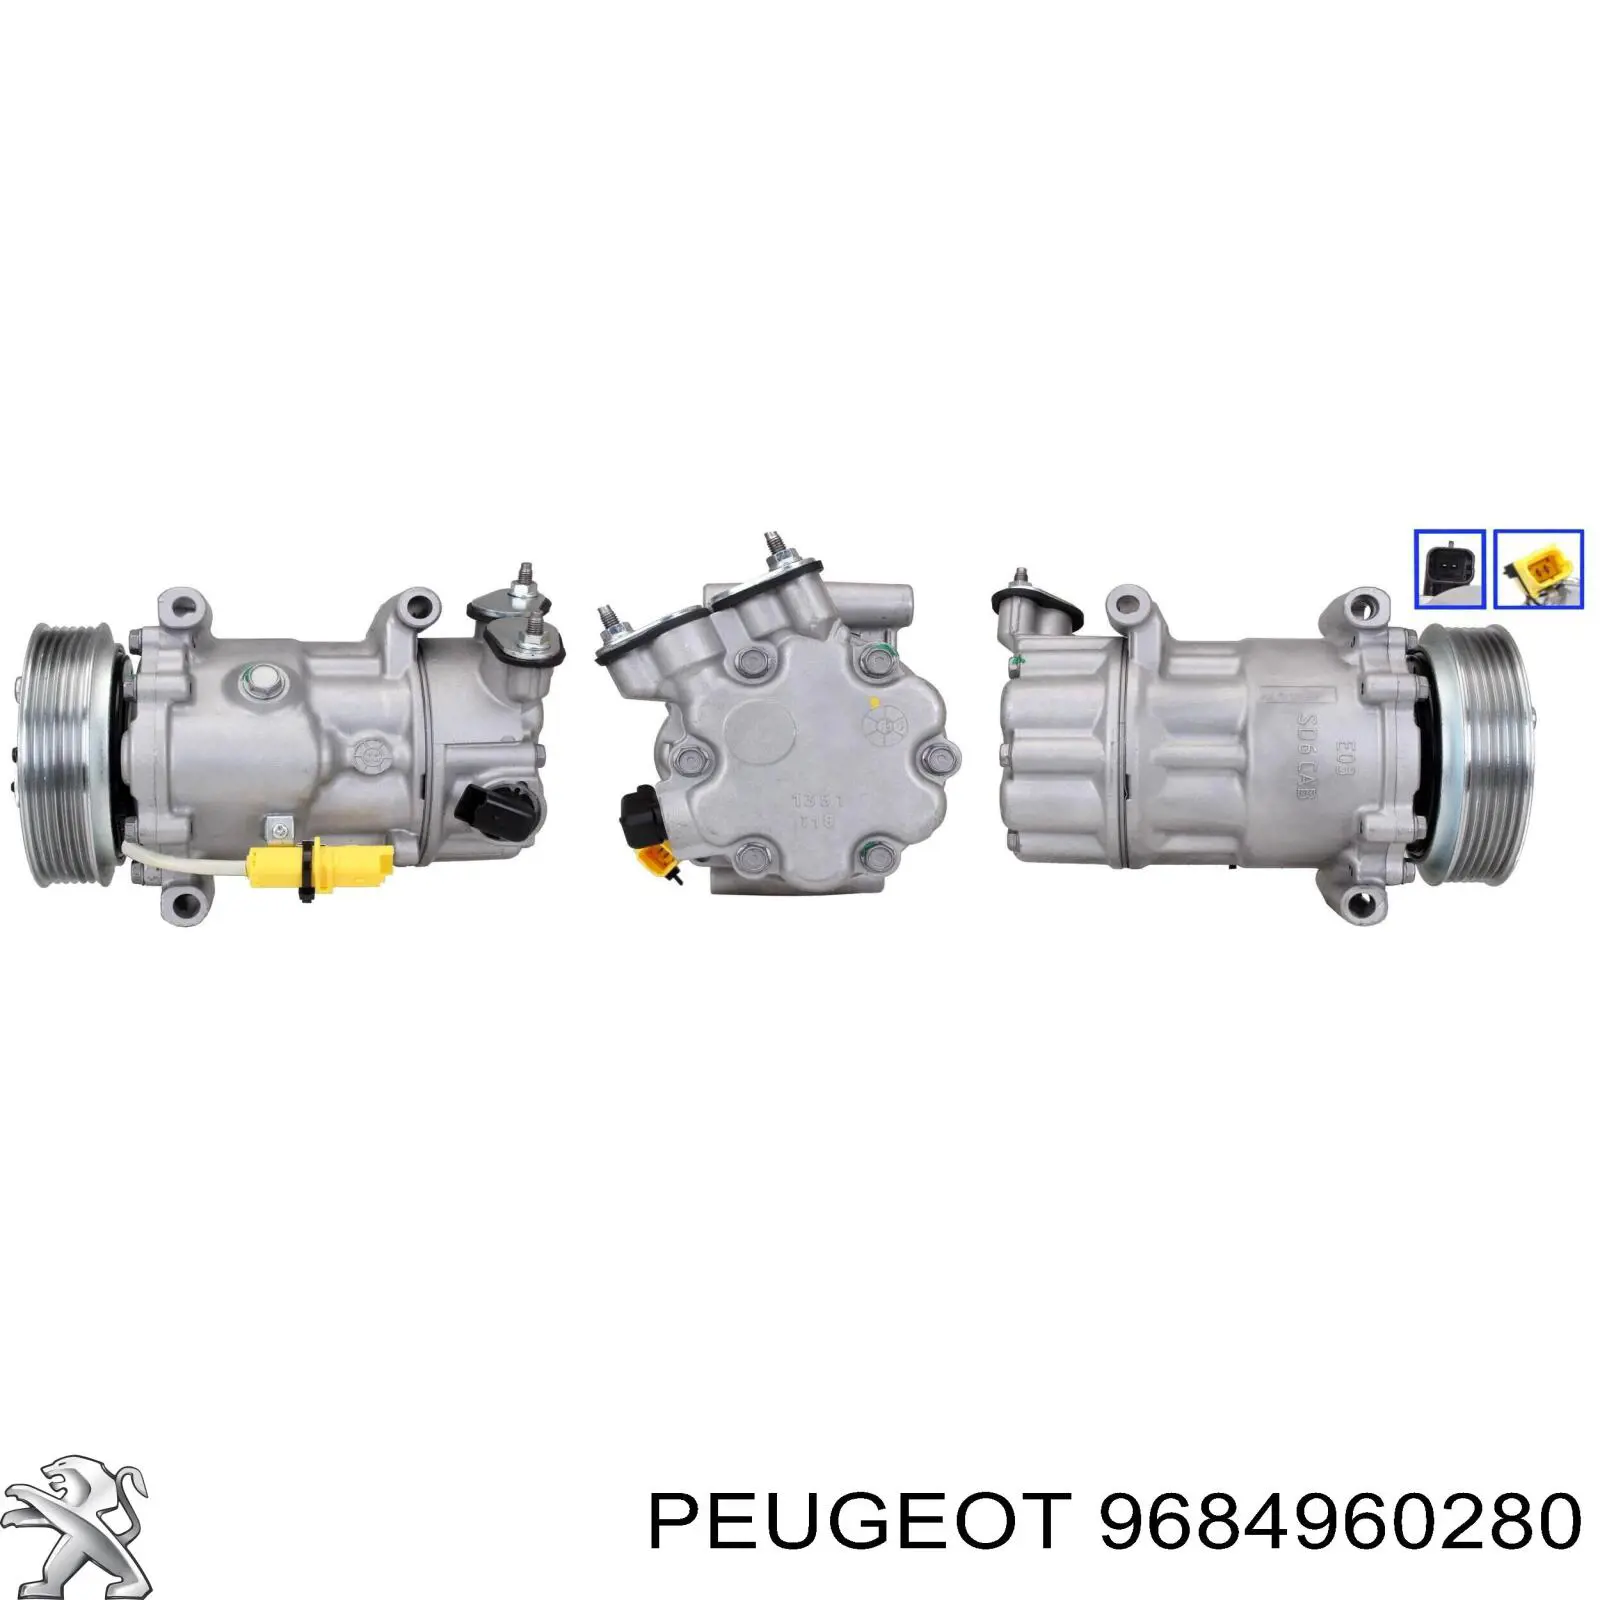 9684960280 Peugeot/Citroen compressor de aparelho de ar condicionado